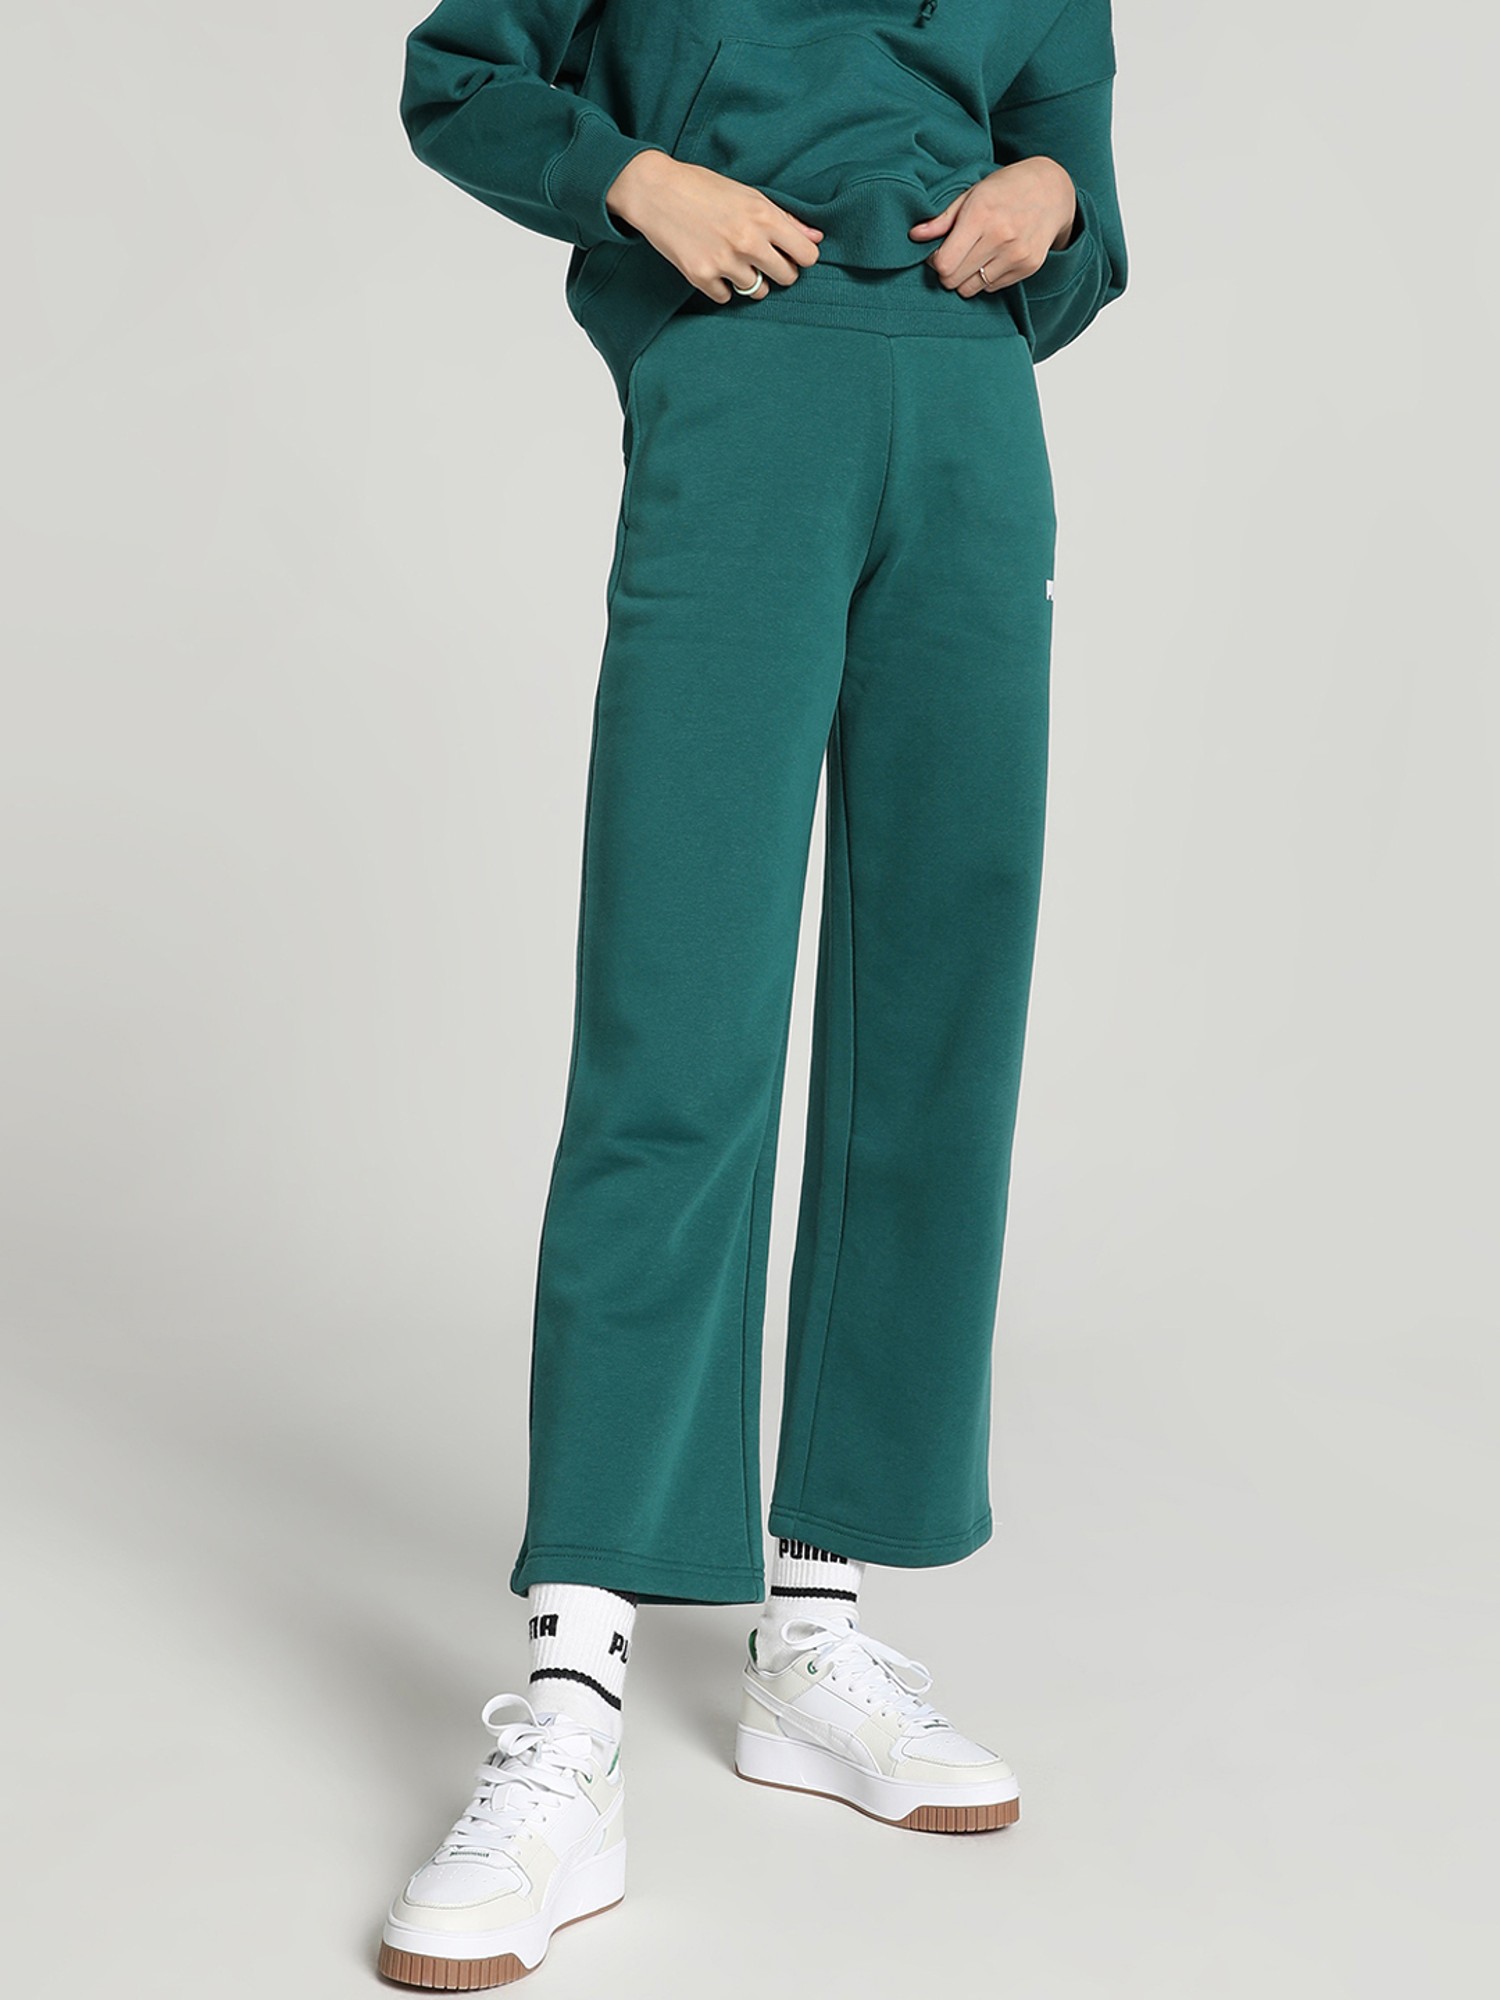 Simple Side Pocket Track Pants Elastic Jogger Light Blue at Amazon Men's  Clothing store